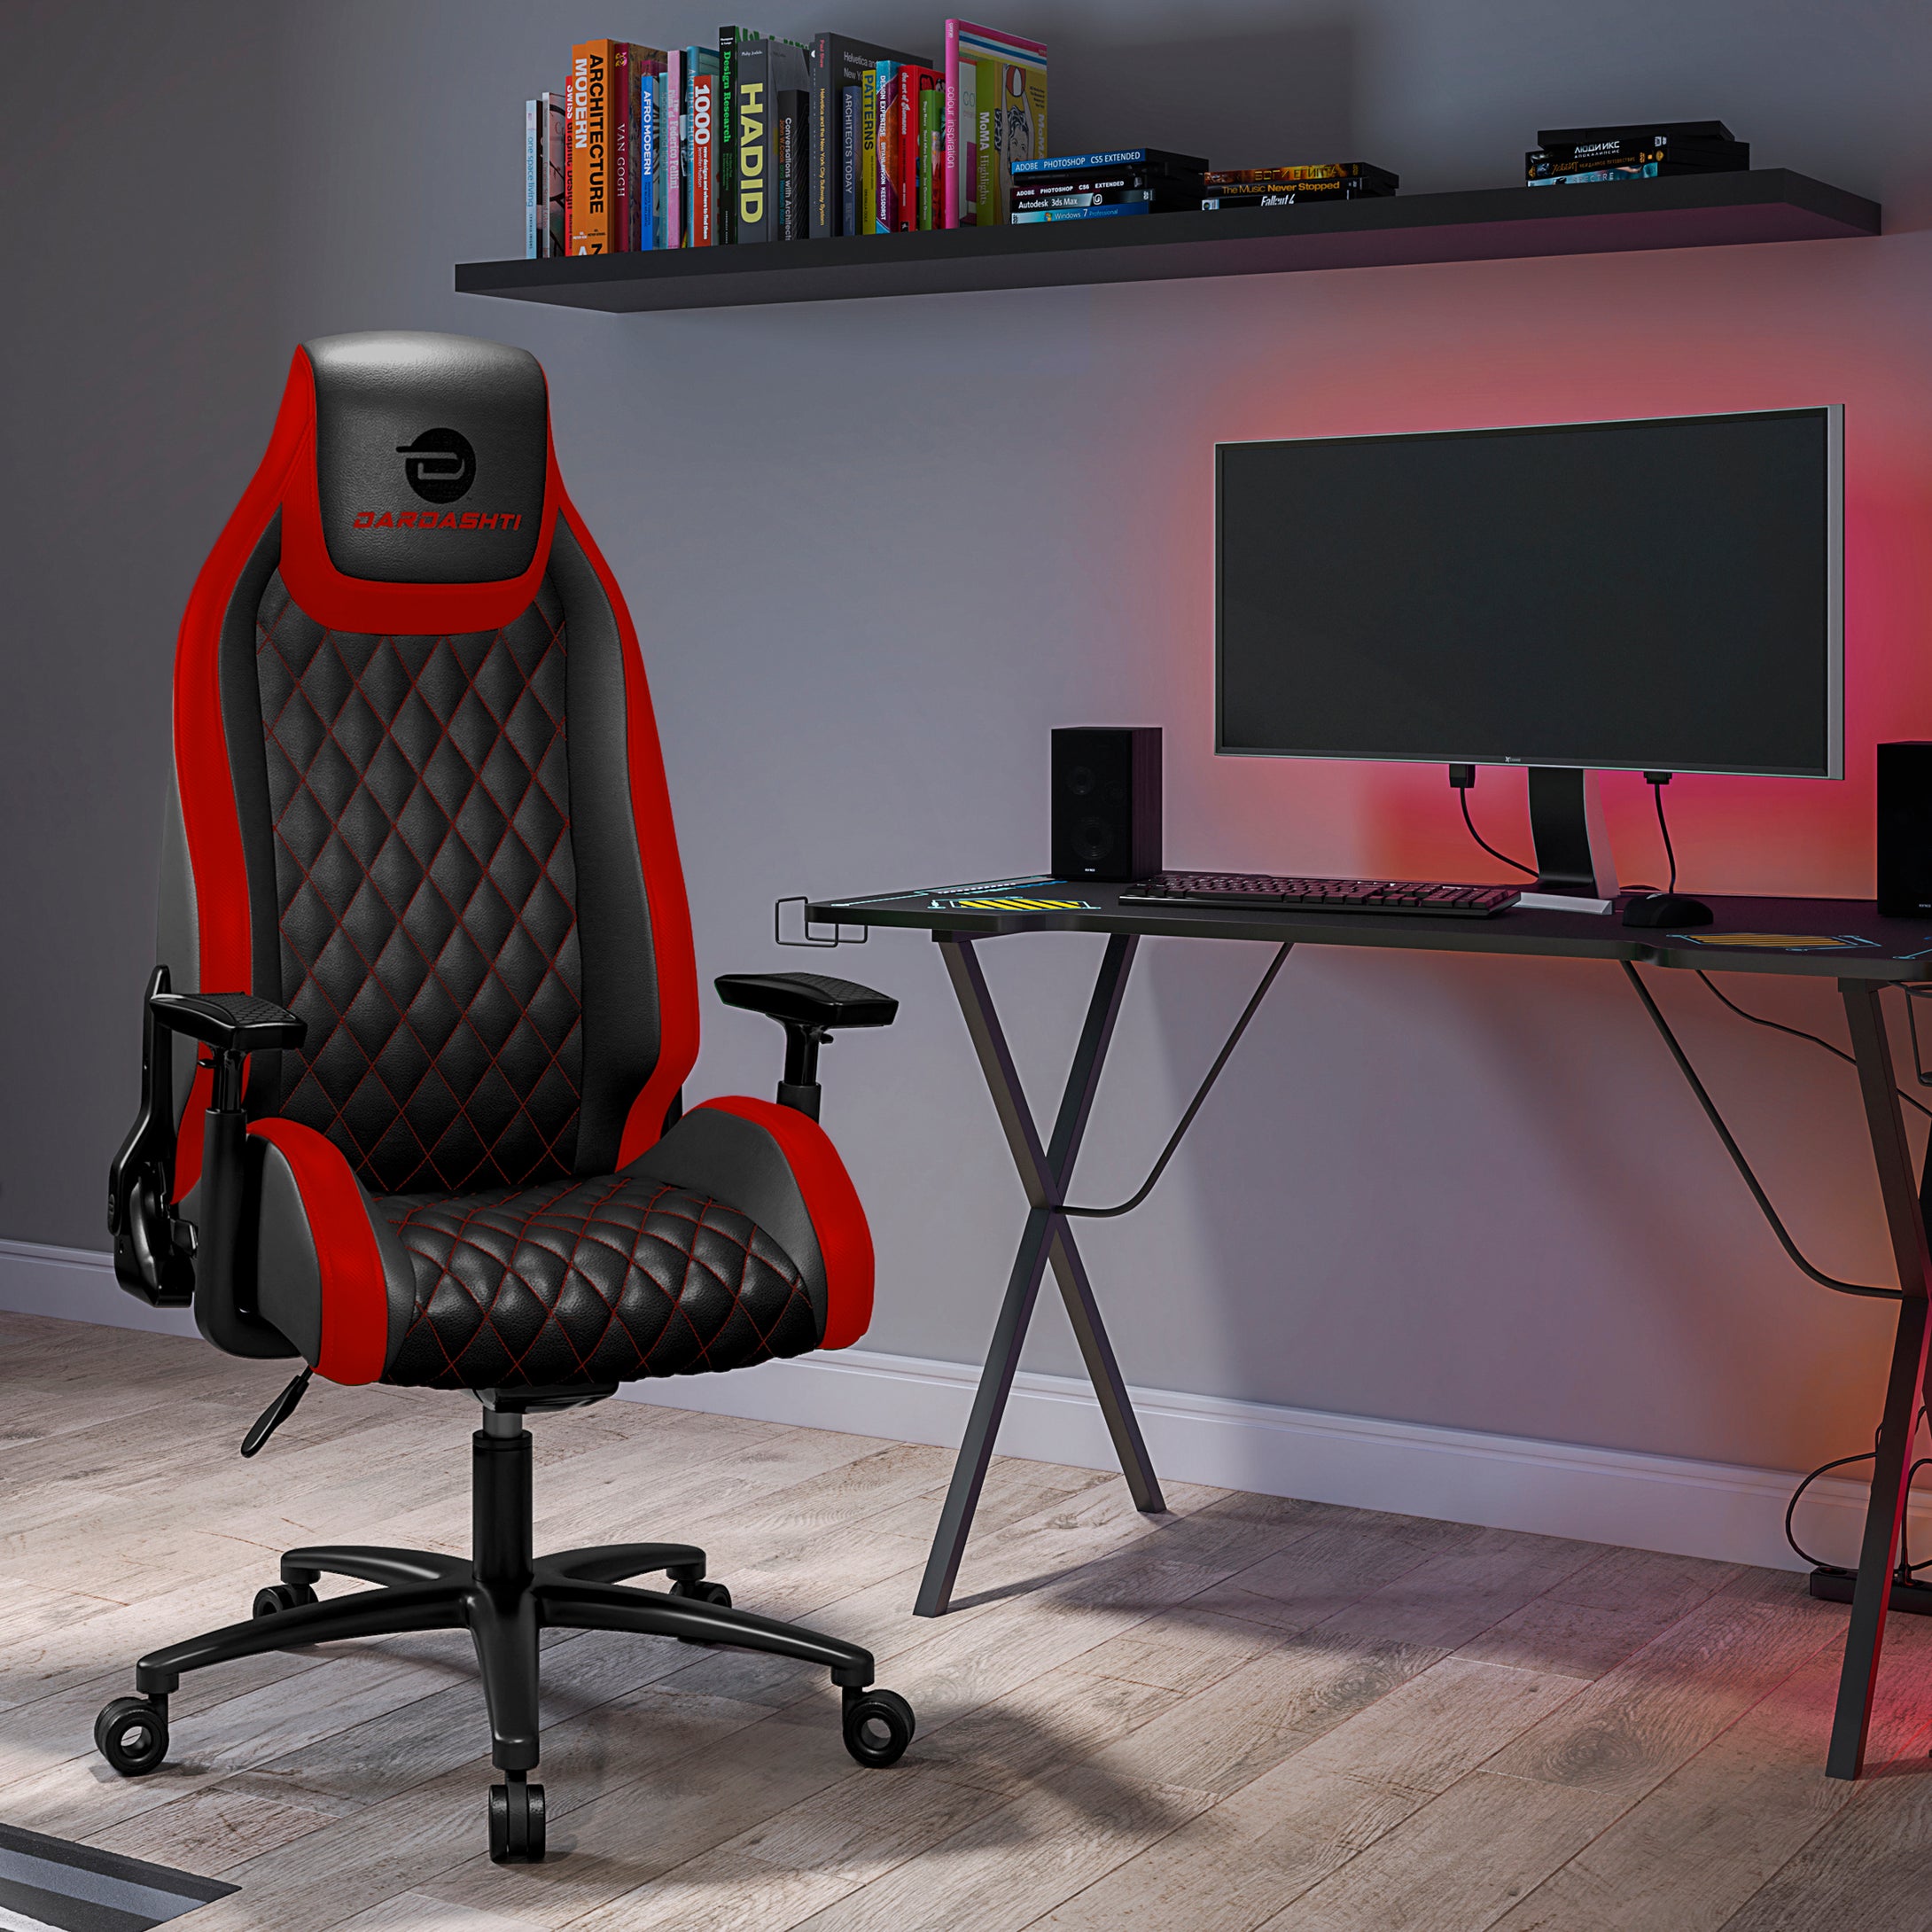 Dardashti Office/Gaming Chair (Red)